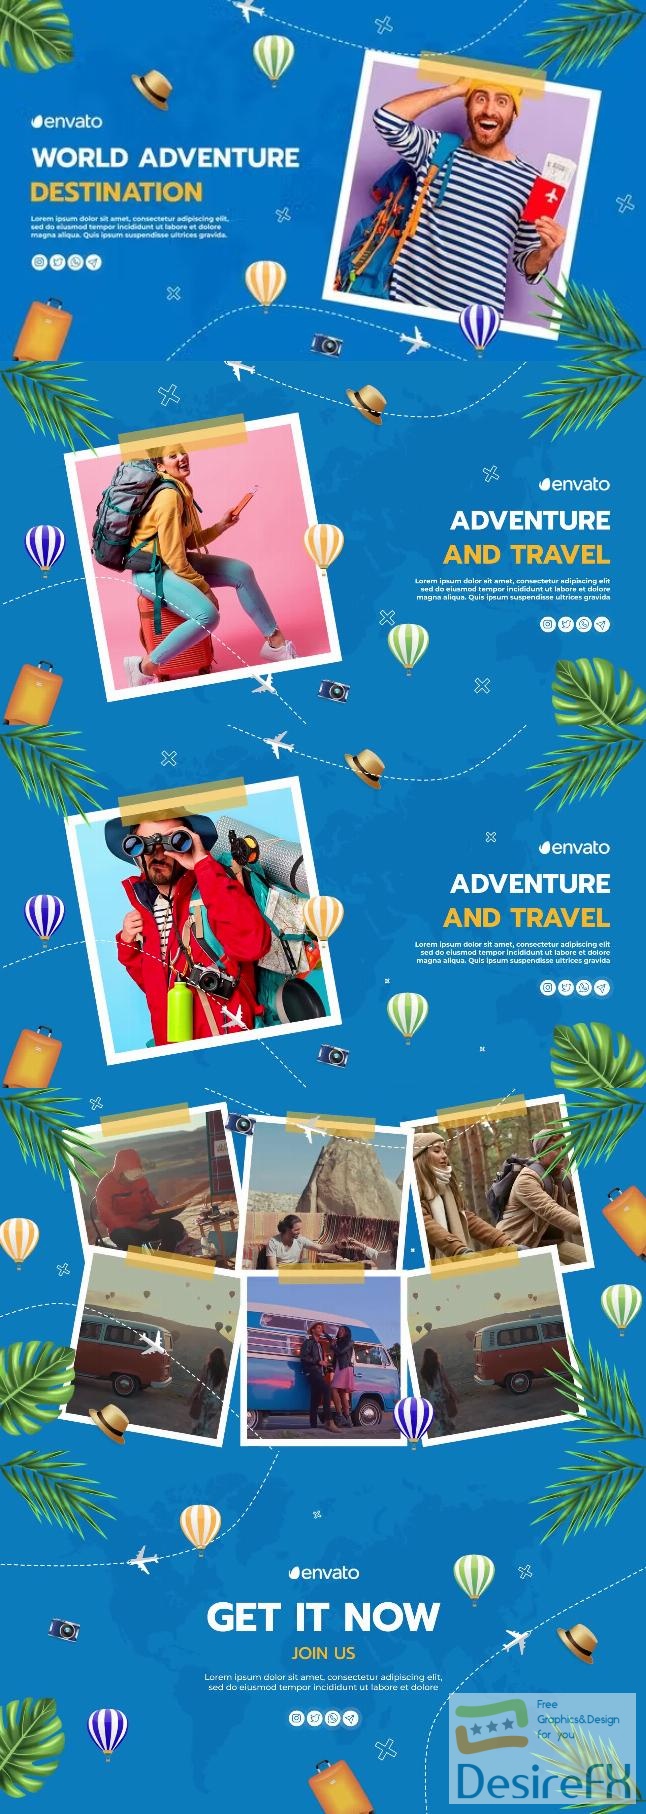 Videohive Travel And Adventure Slideshow 37246511